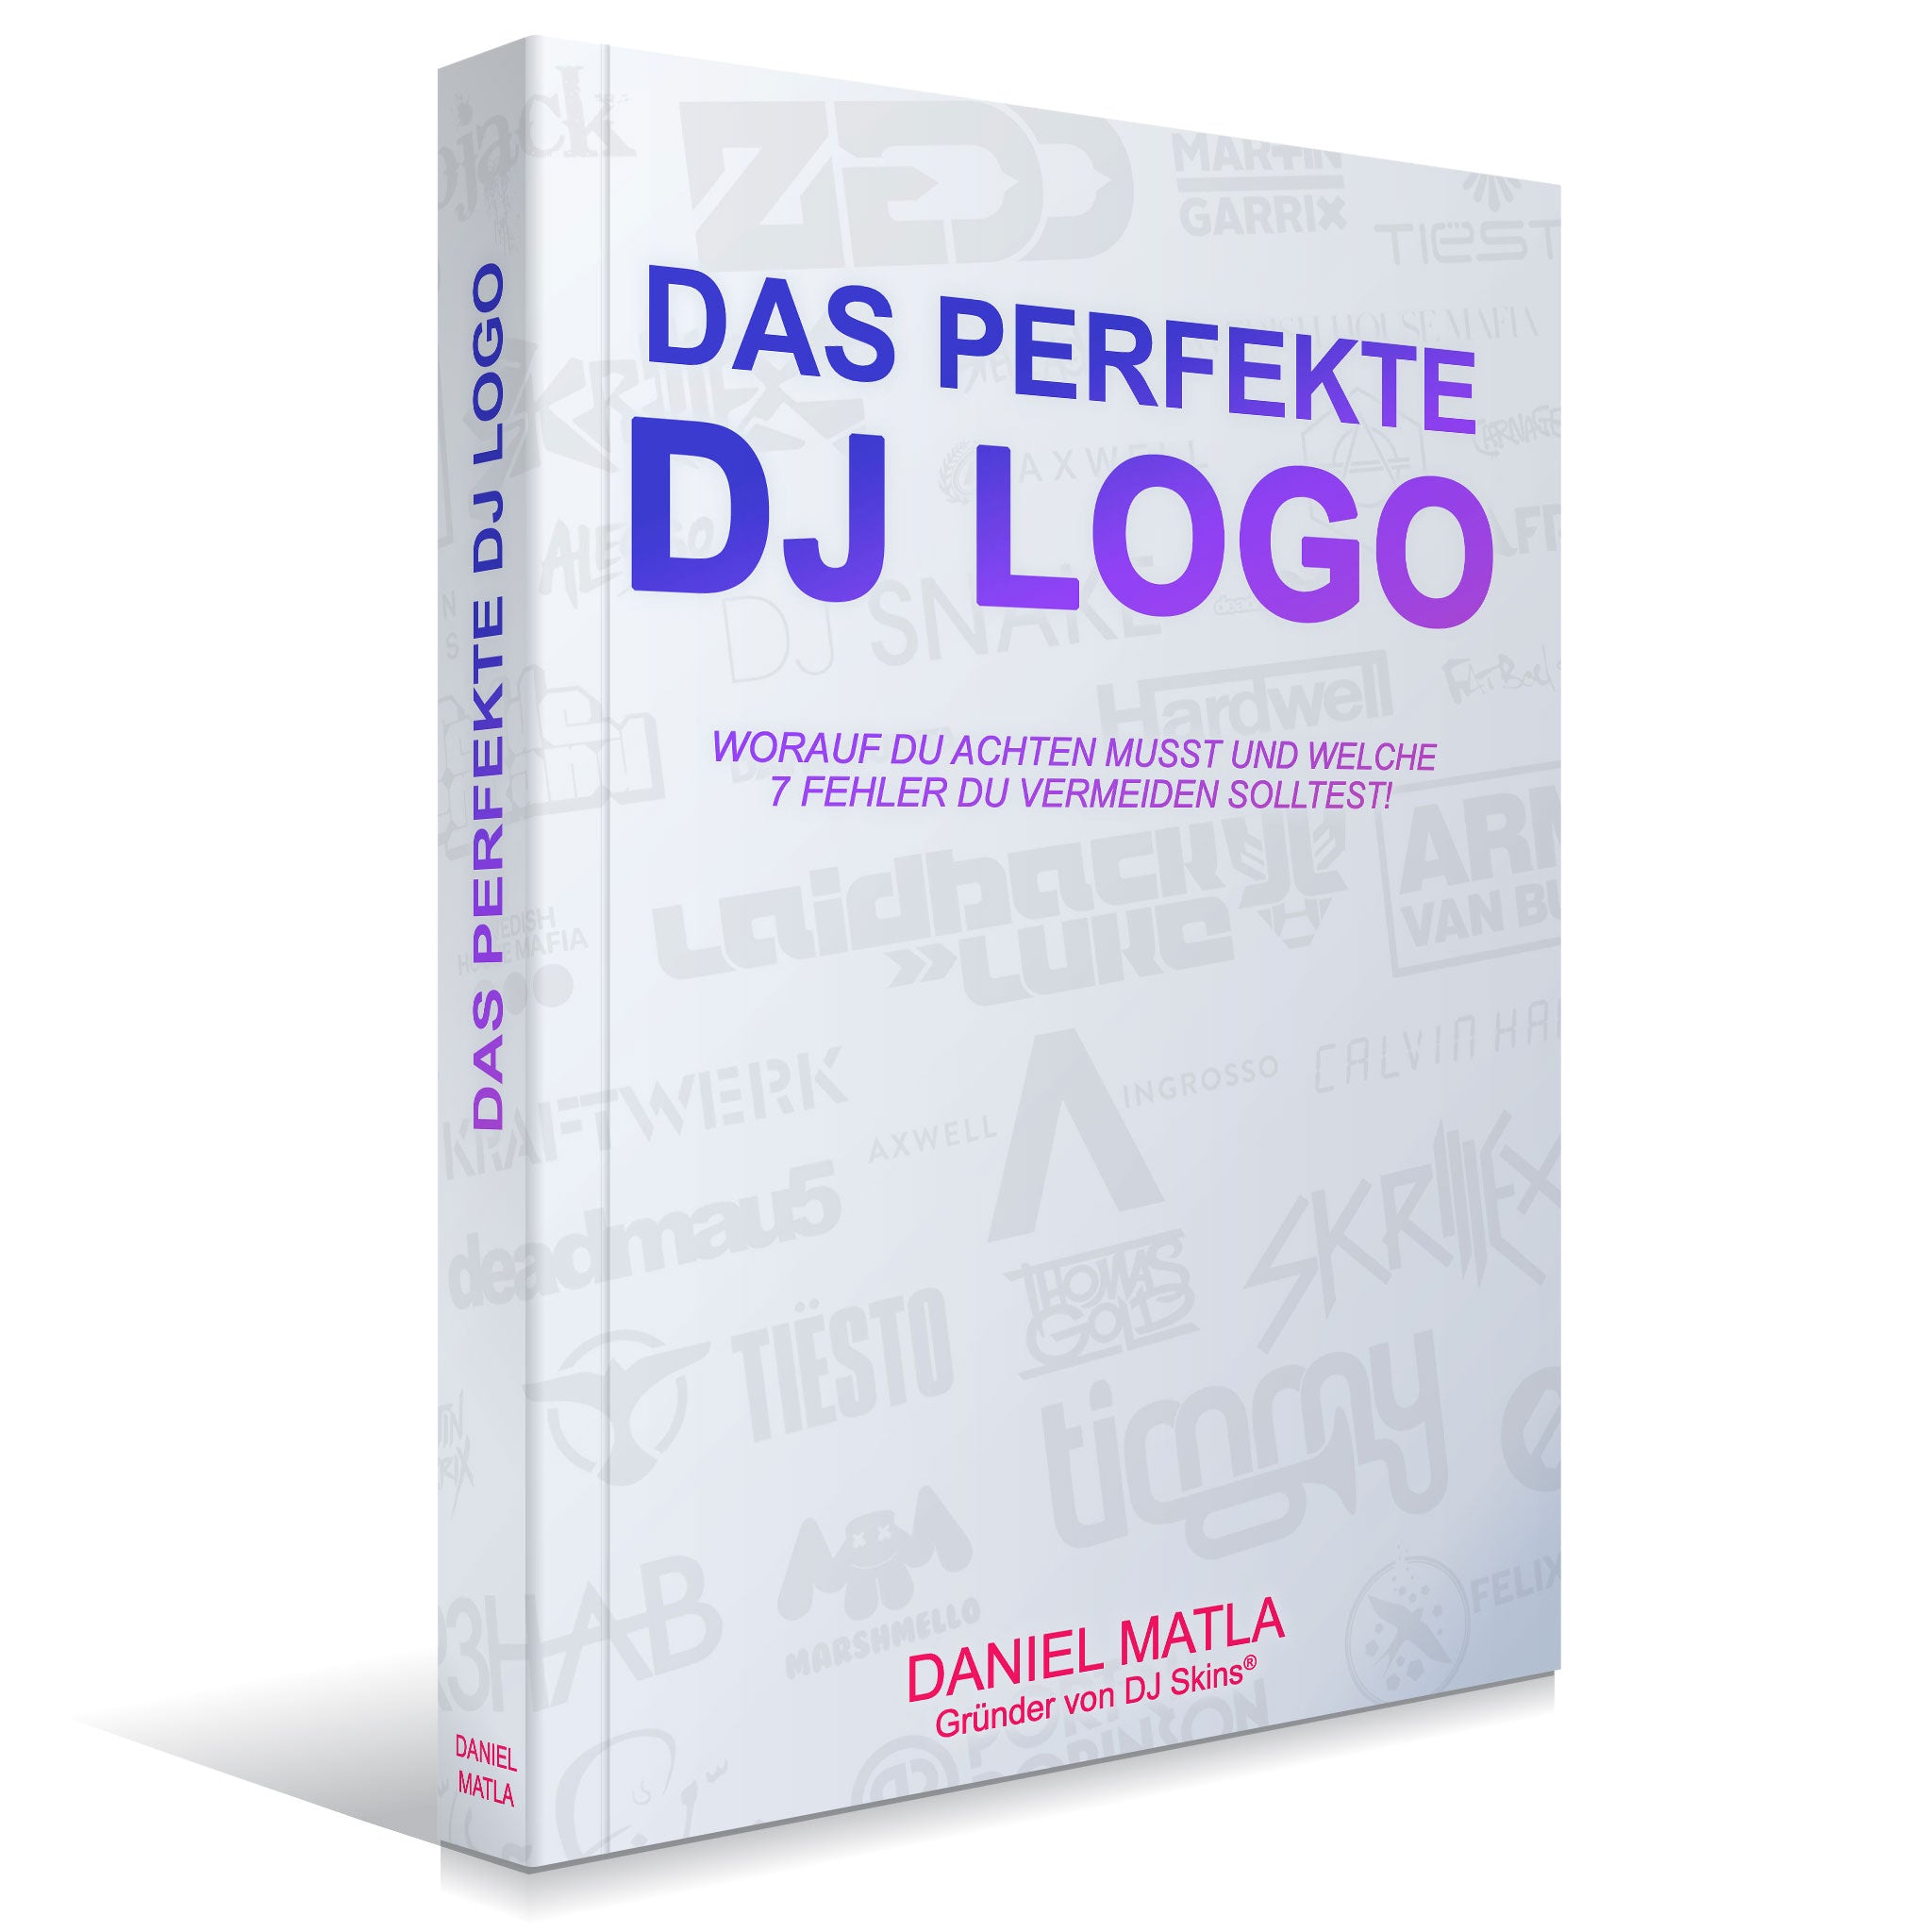 Das Perfekte DJ Logo (e-Book) - ab dem 6.12. erhältlich